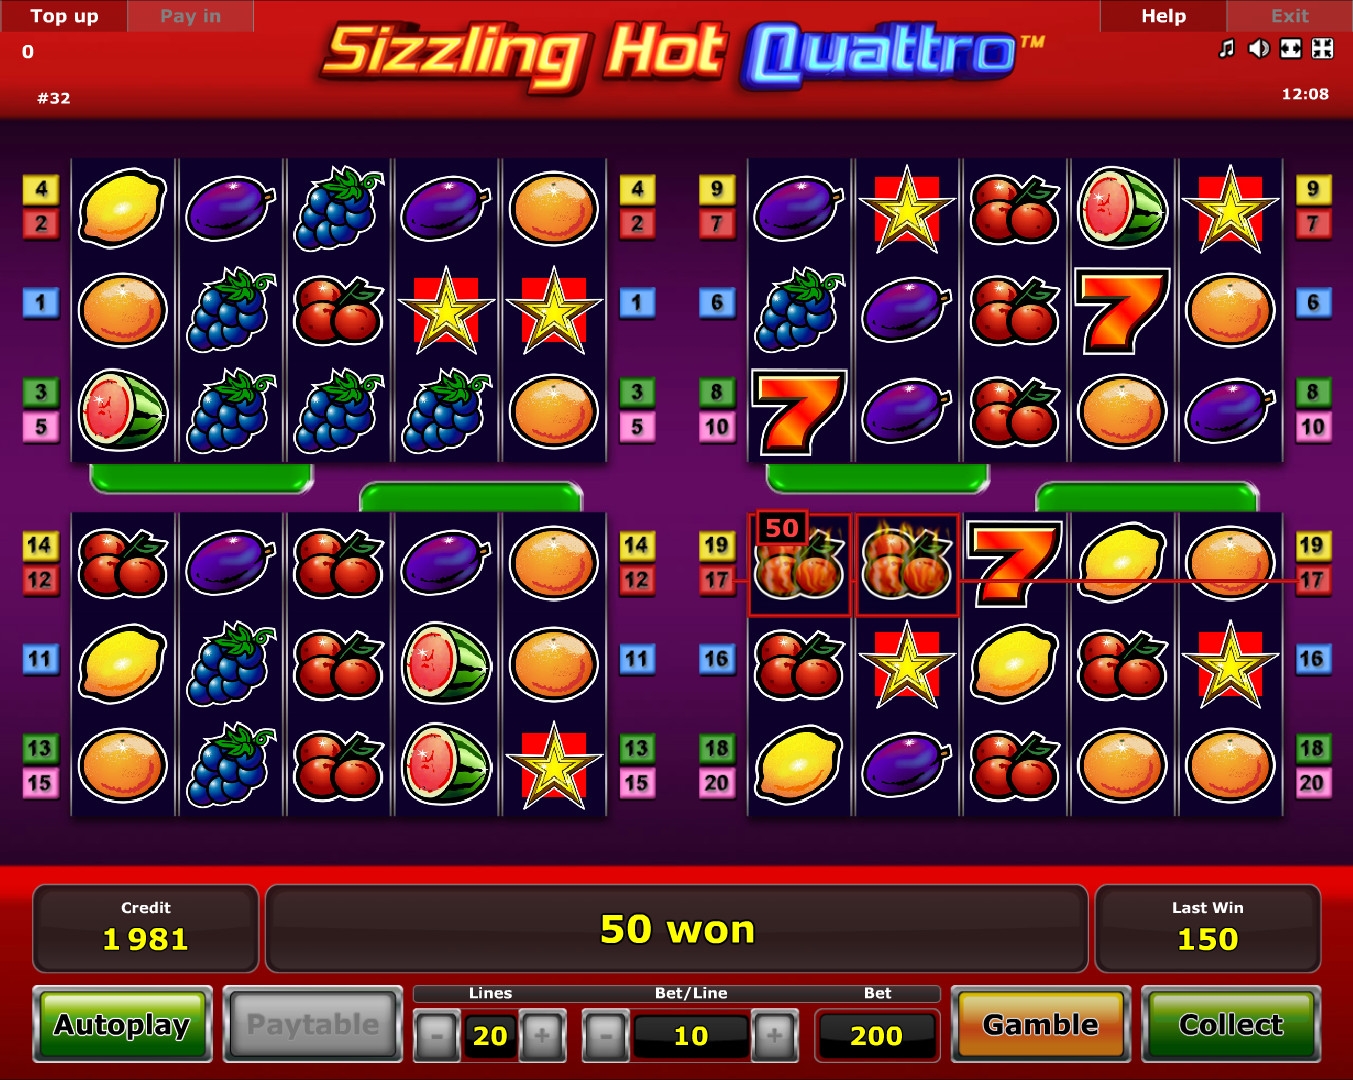 Sizzling Hot Quattro (Sizzling Hot Quattro) from category Slots